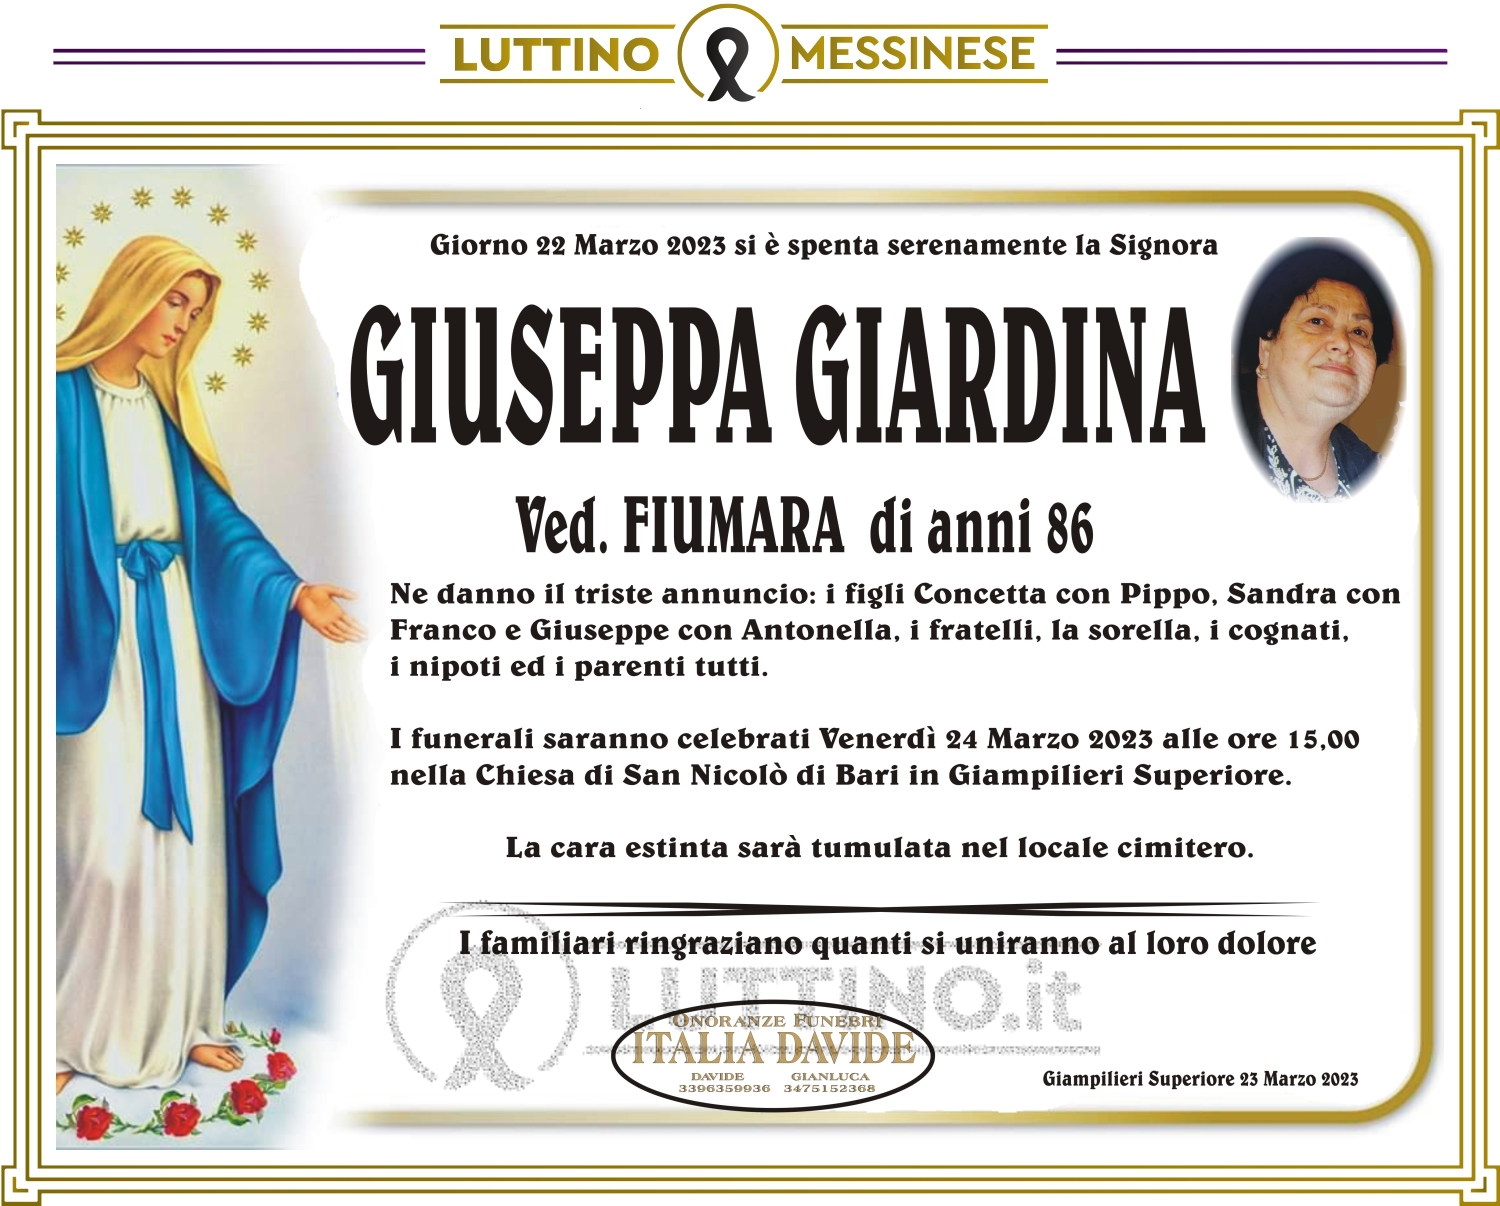 Giuseppa Giardina